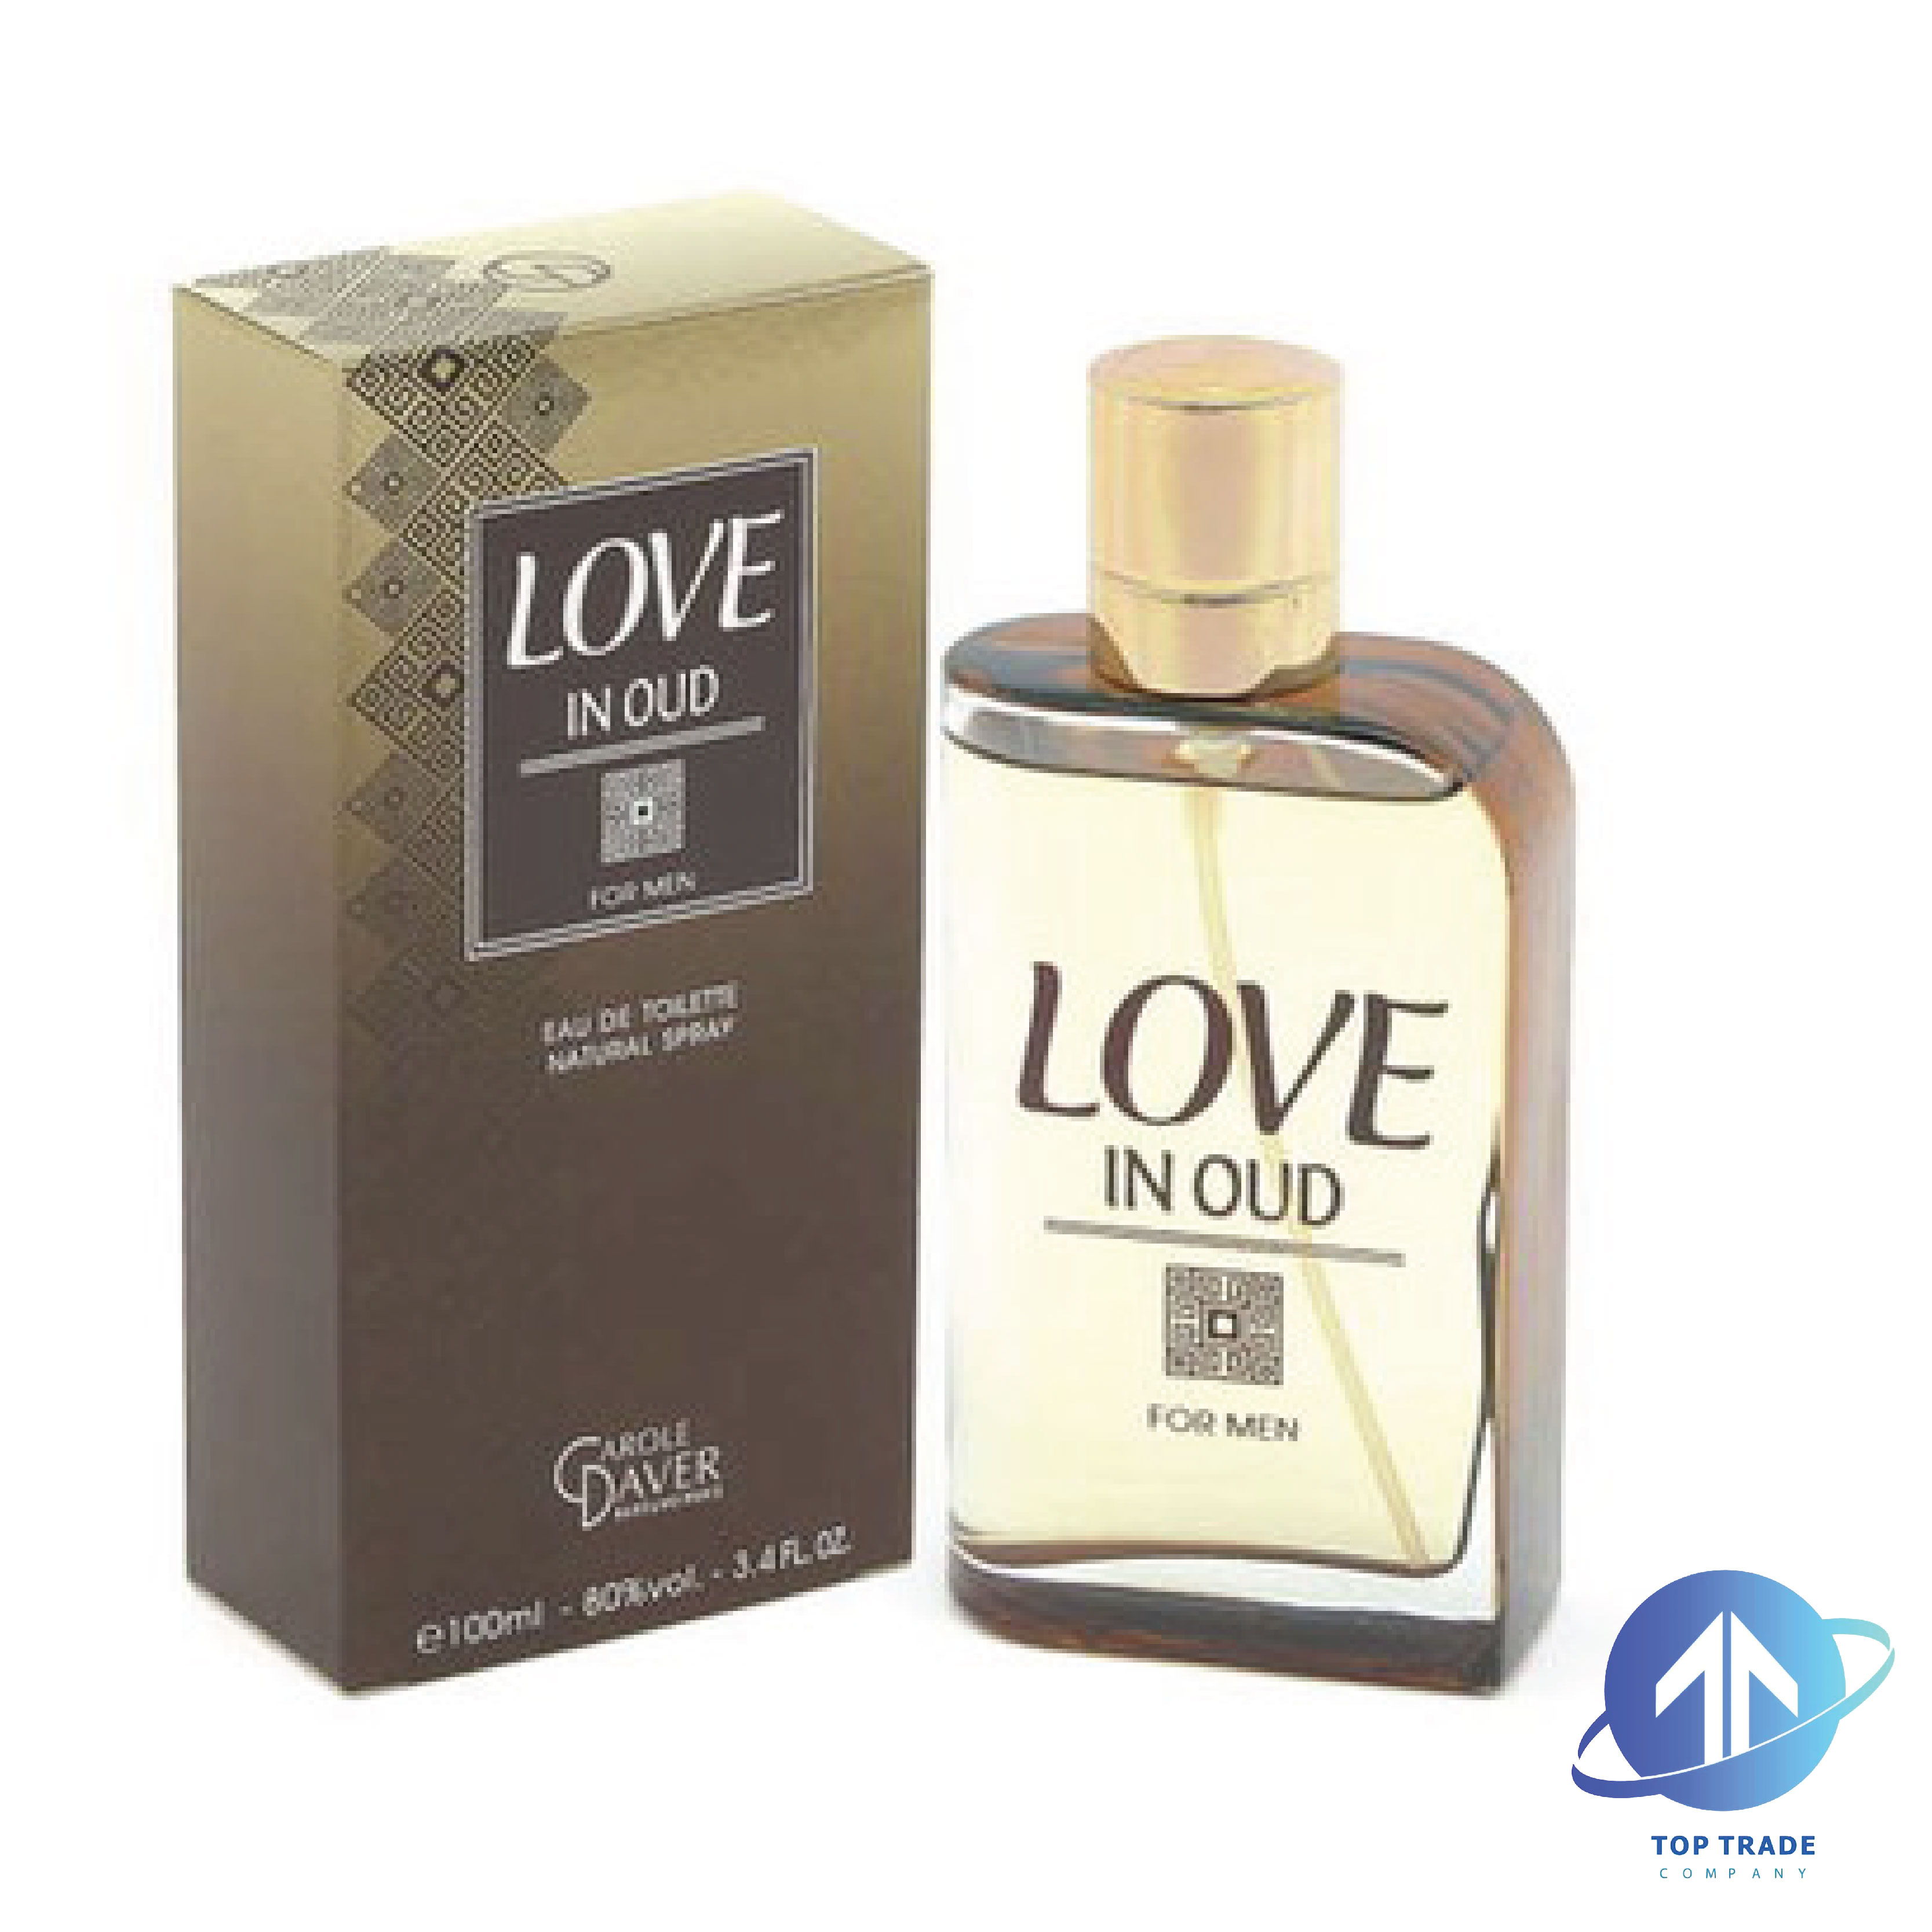 Carole Daver Parfums Paris Men - Love in Oud Edition 100ml